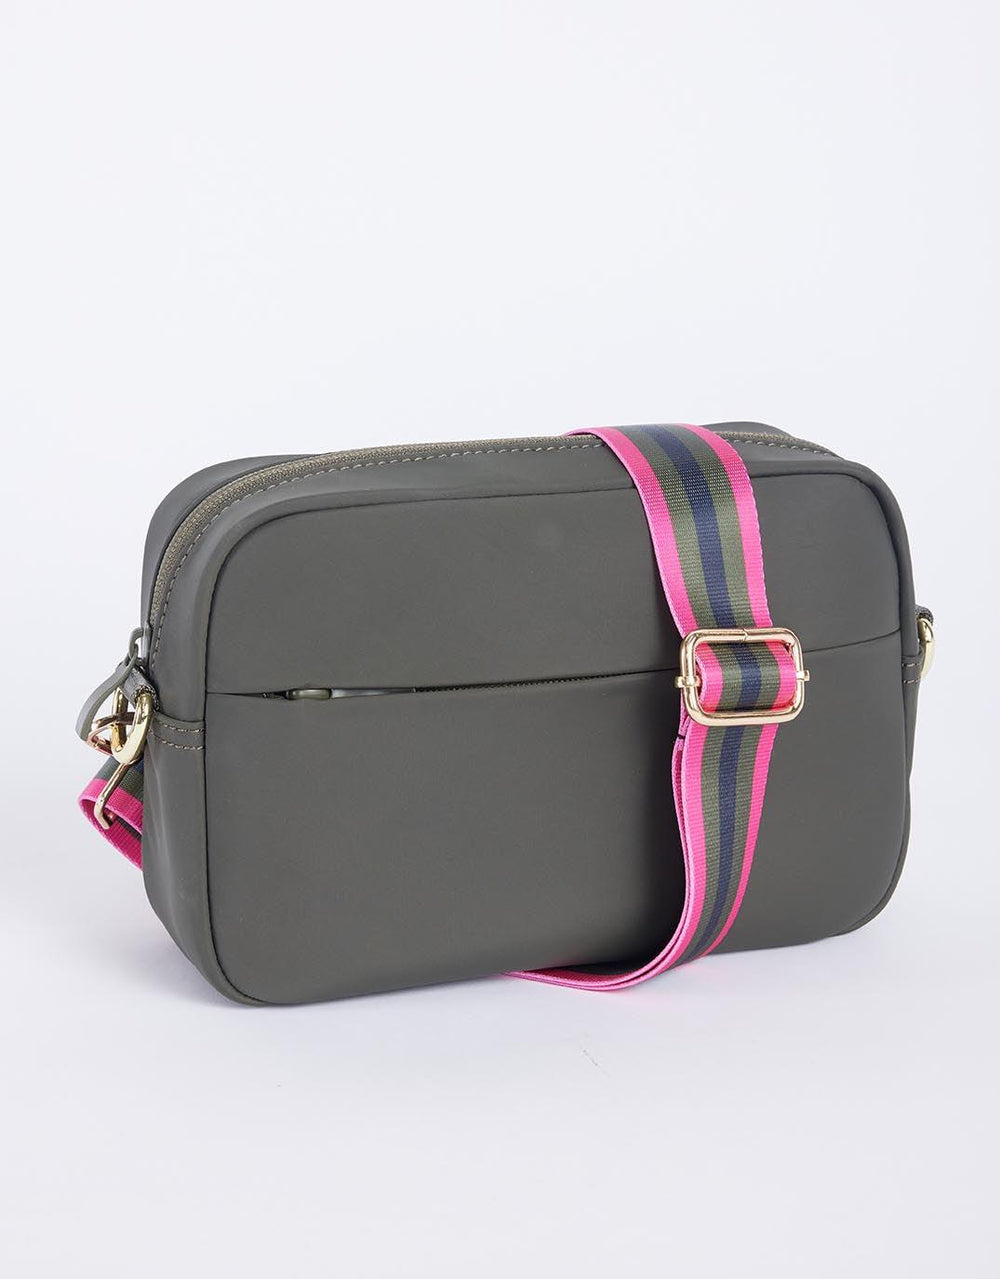 White & Co. - Off-Duty Crossbody Bag - Khaki with Khaki/Hot Pink Stripe - White & Co Living Accessories